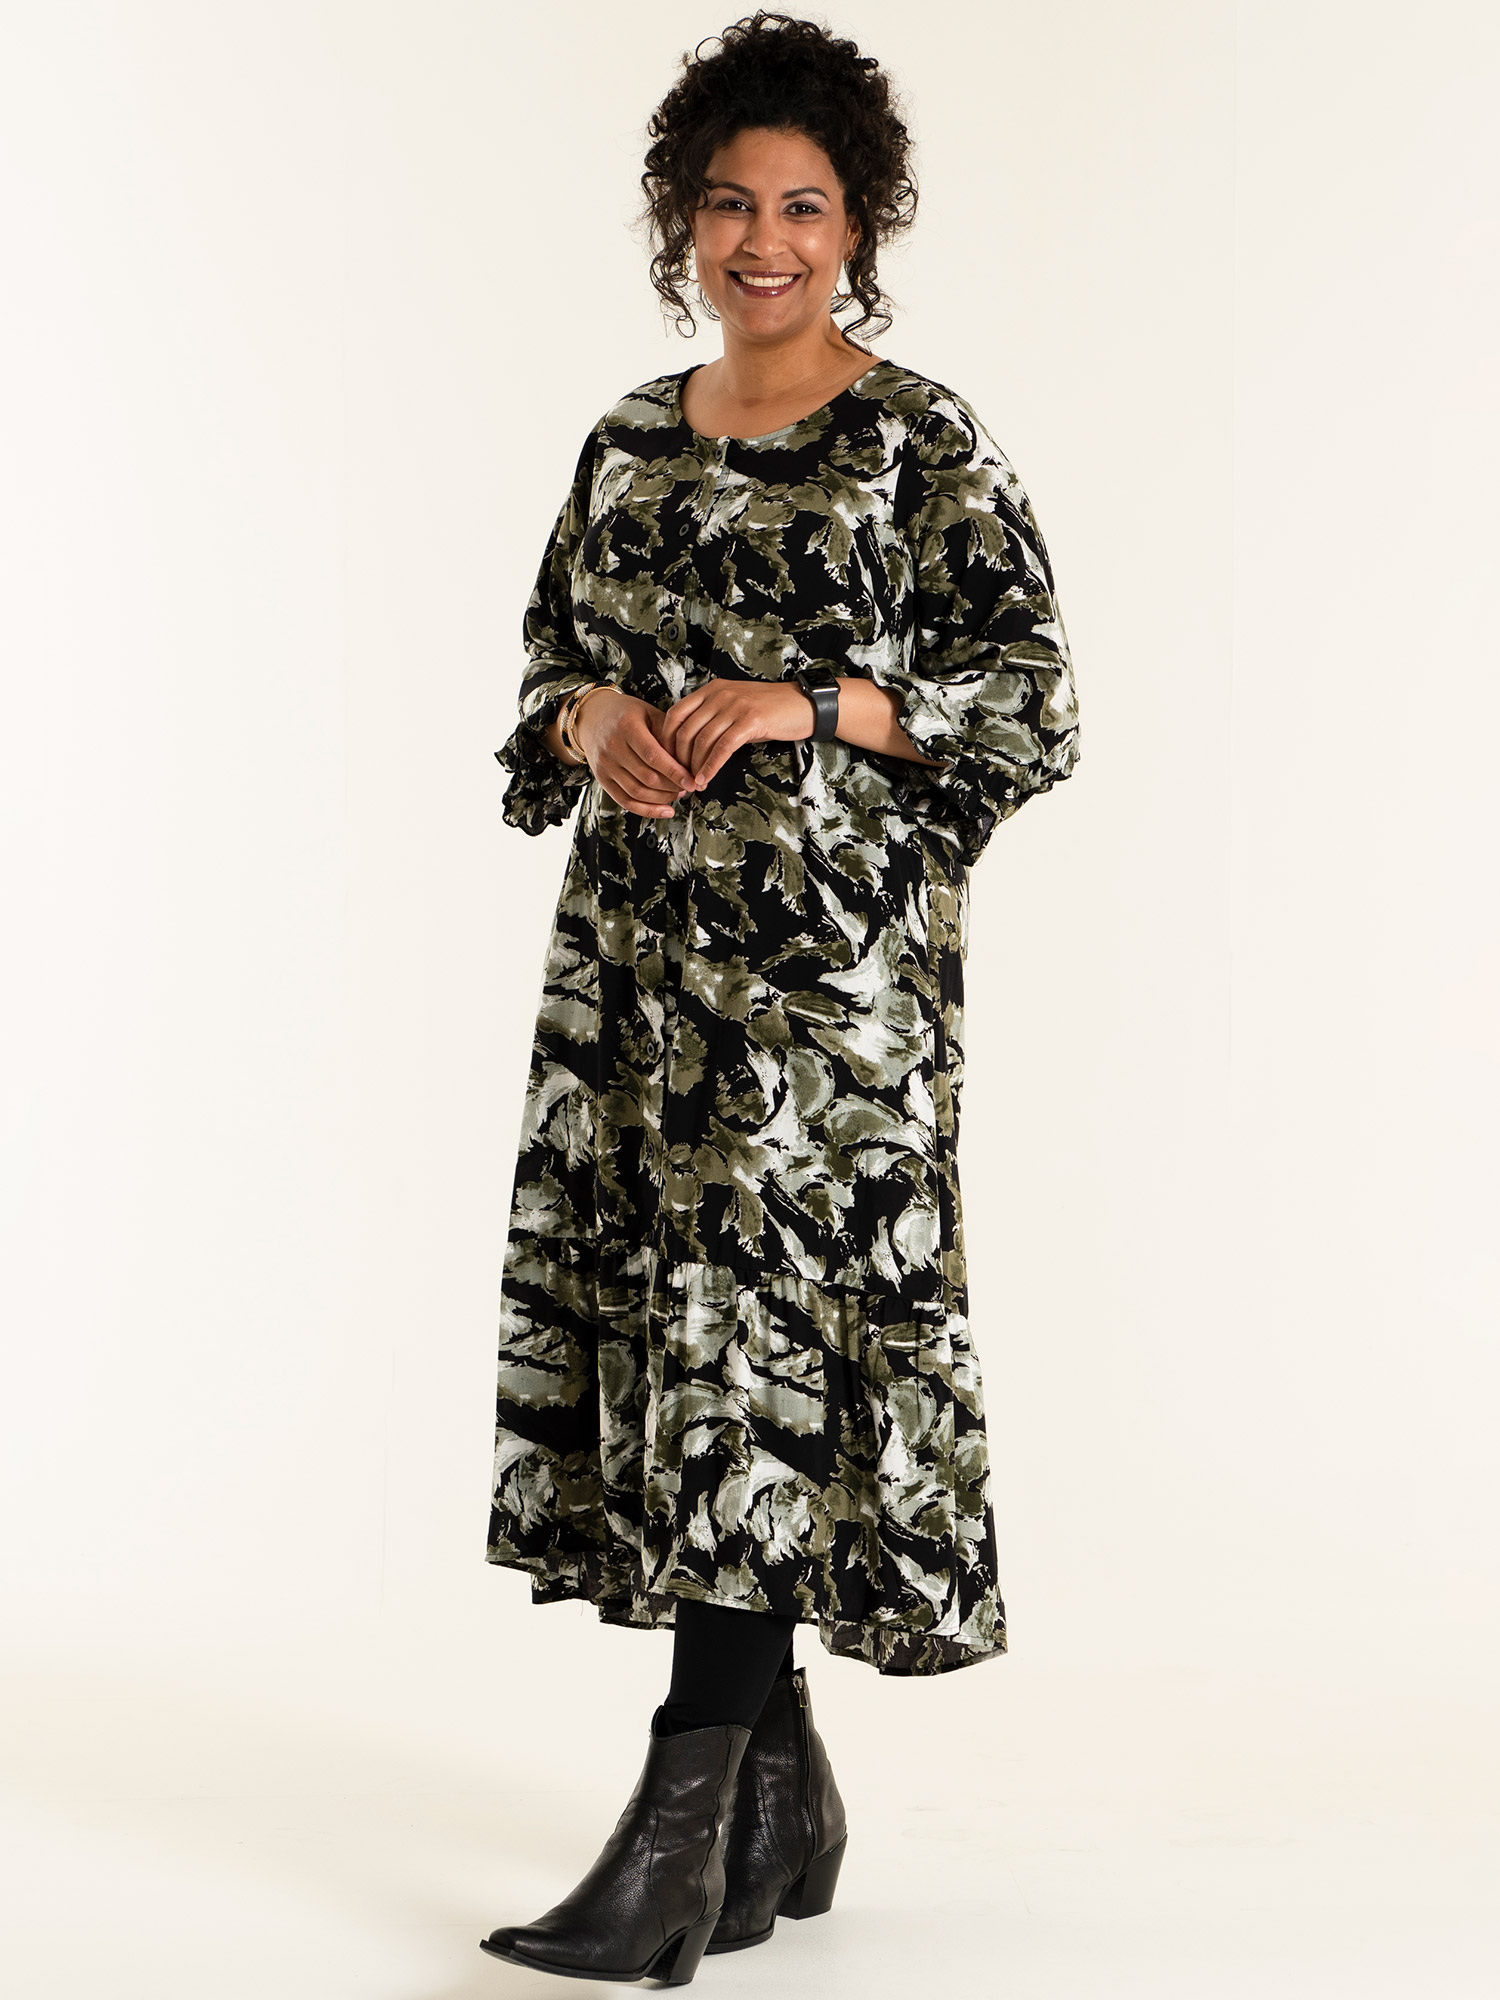 NADINE - Sort viskose kjole med grønt mønster fra Studio